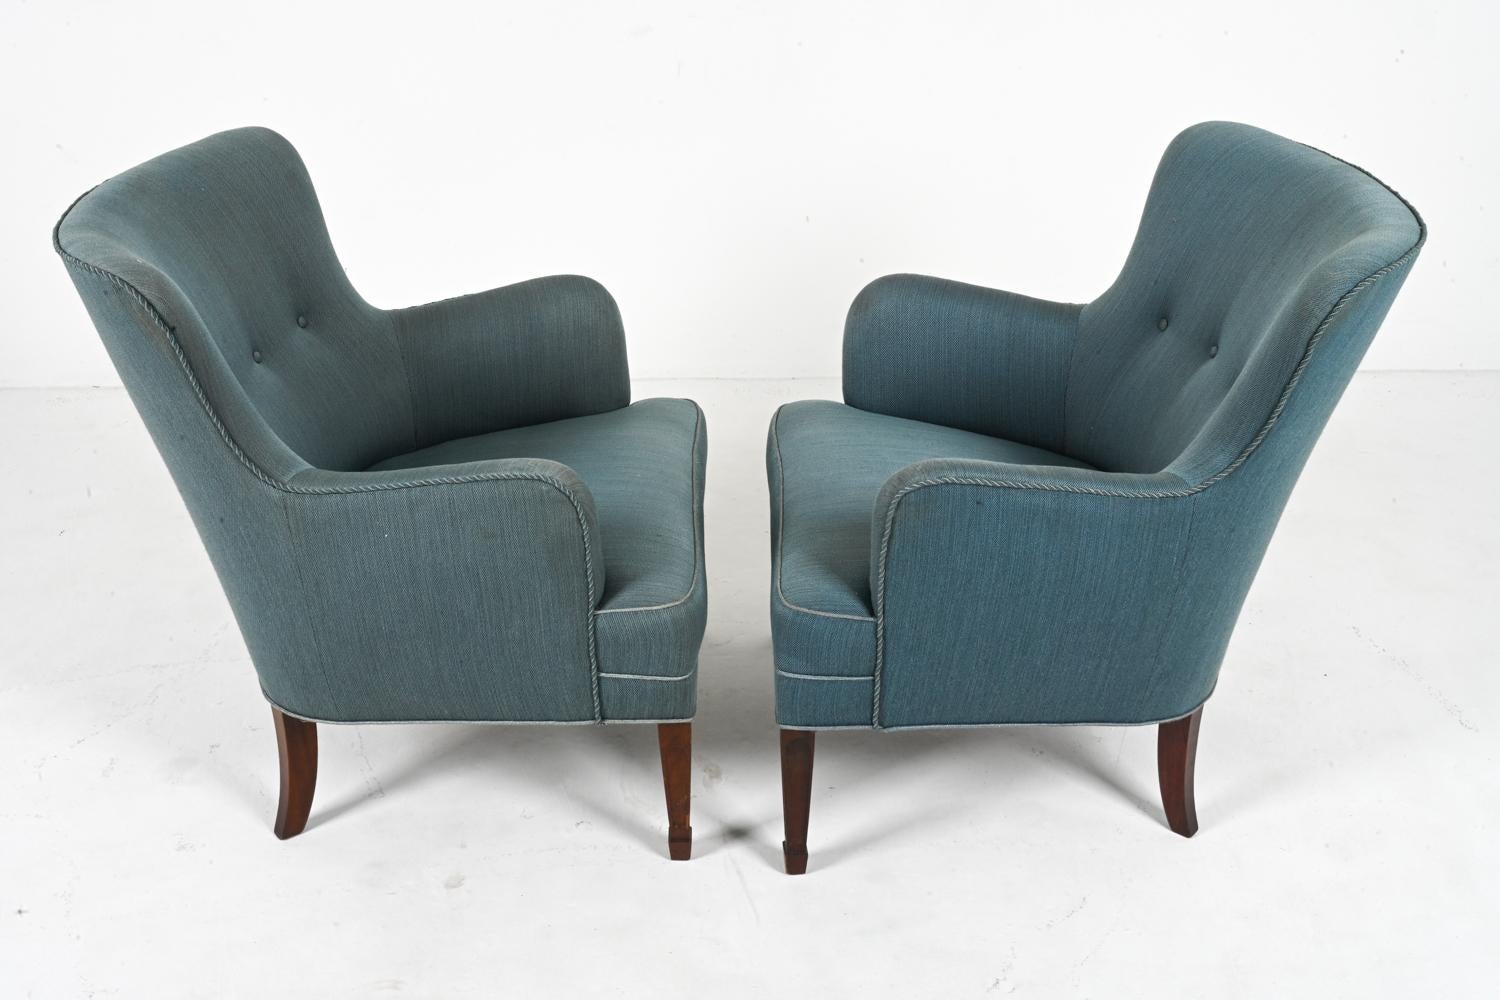 Frits Henningsen Easy Chairs aus Mahagoni, ca. 1940er Jahre, Paar (Stoff) im Angebot